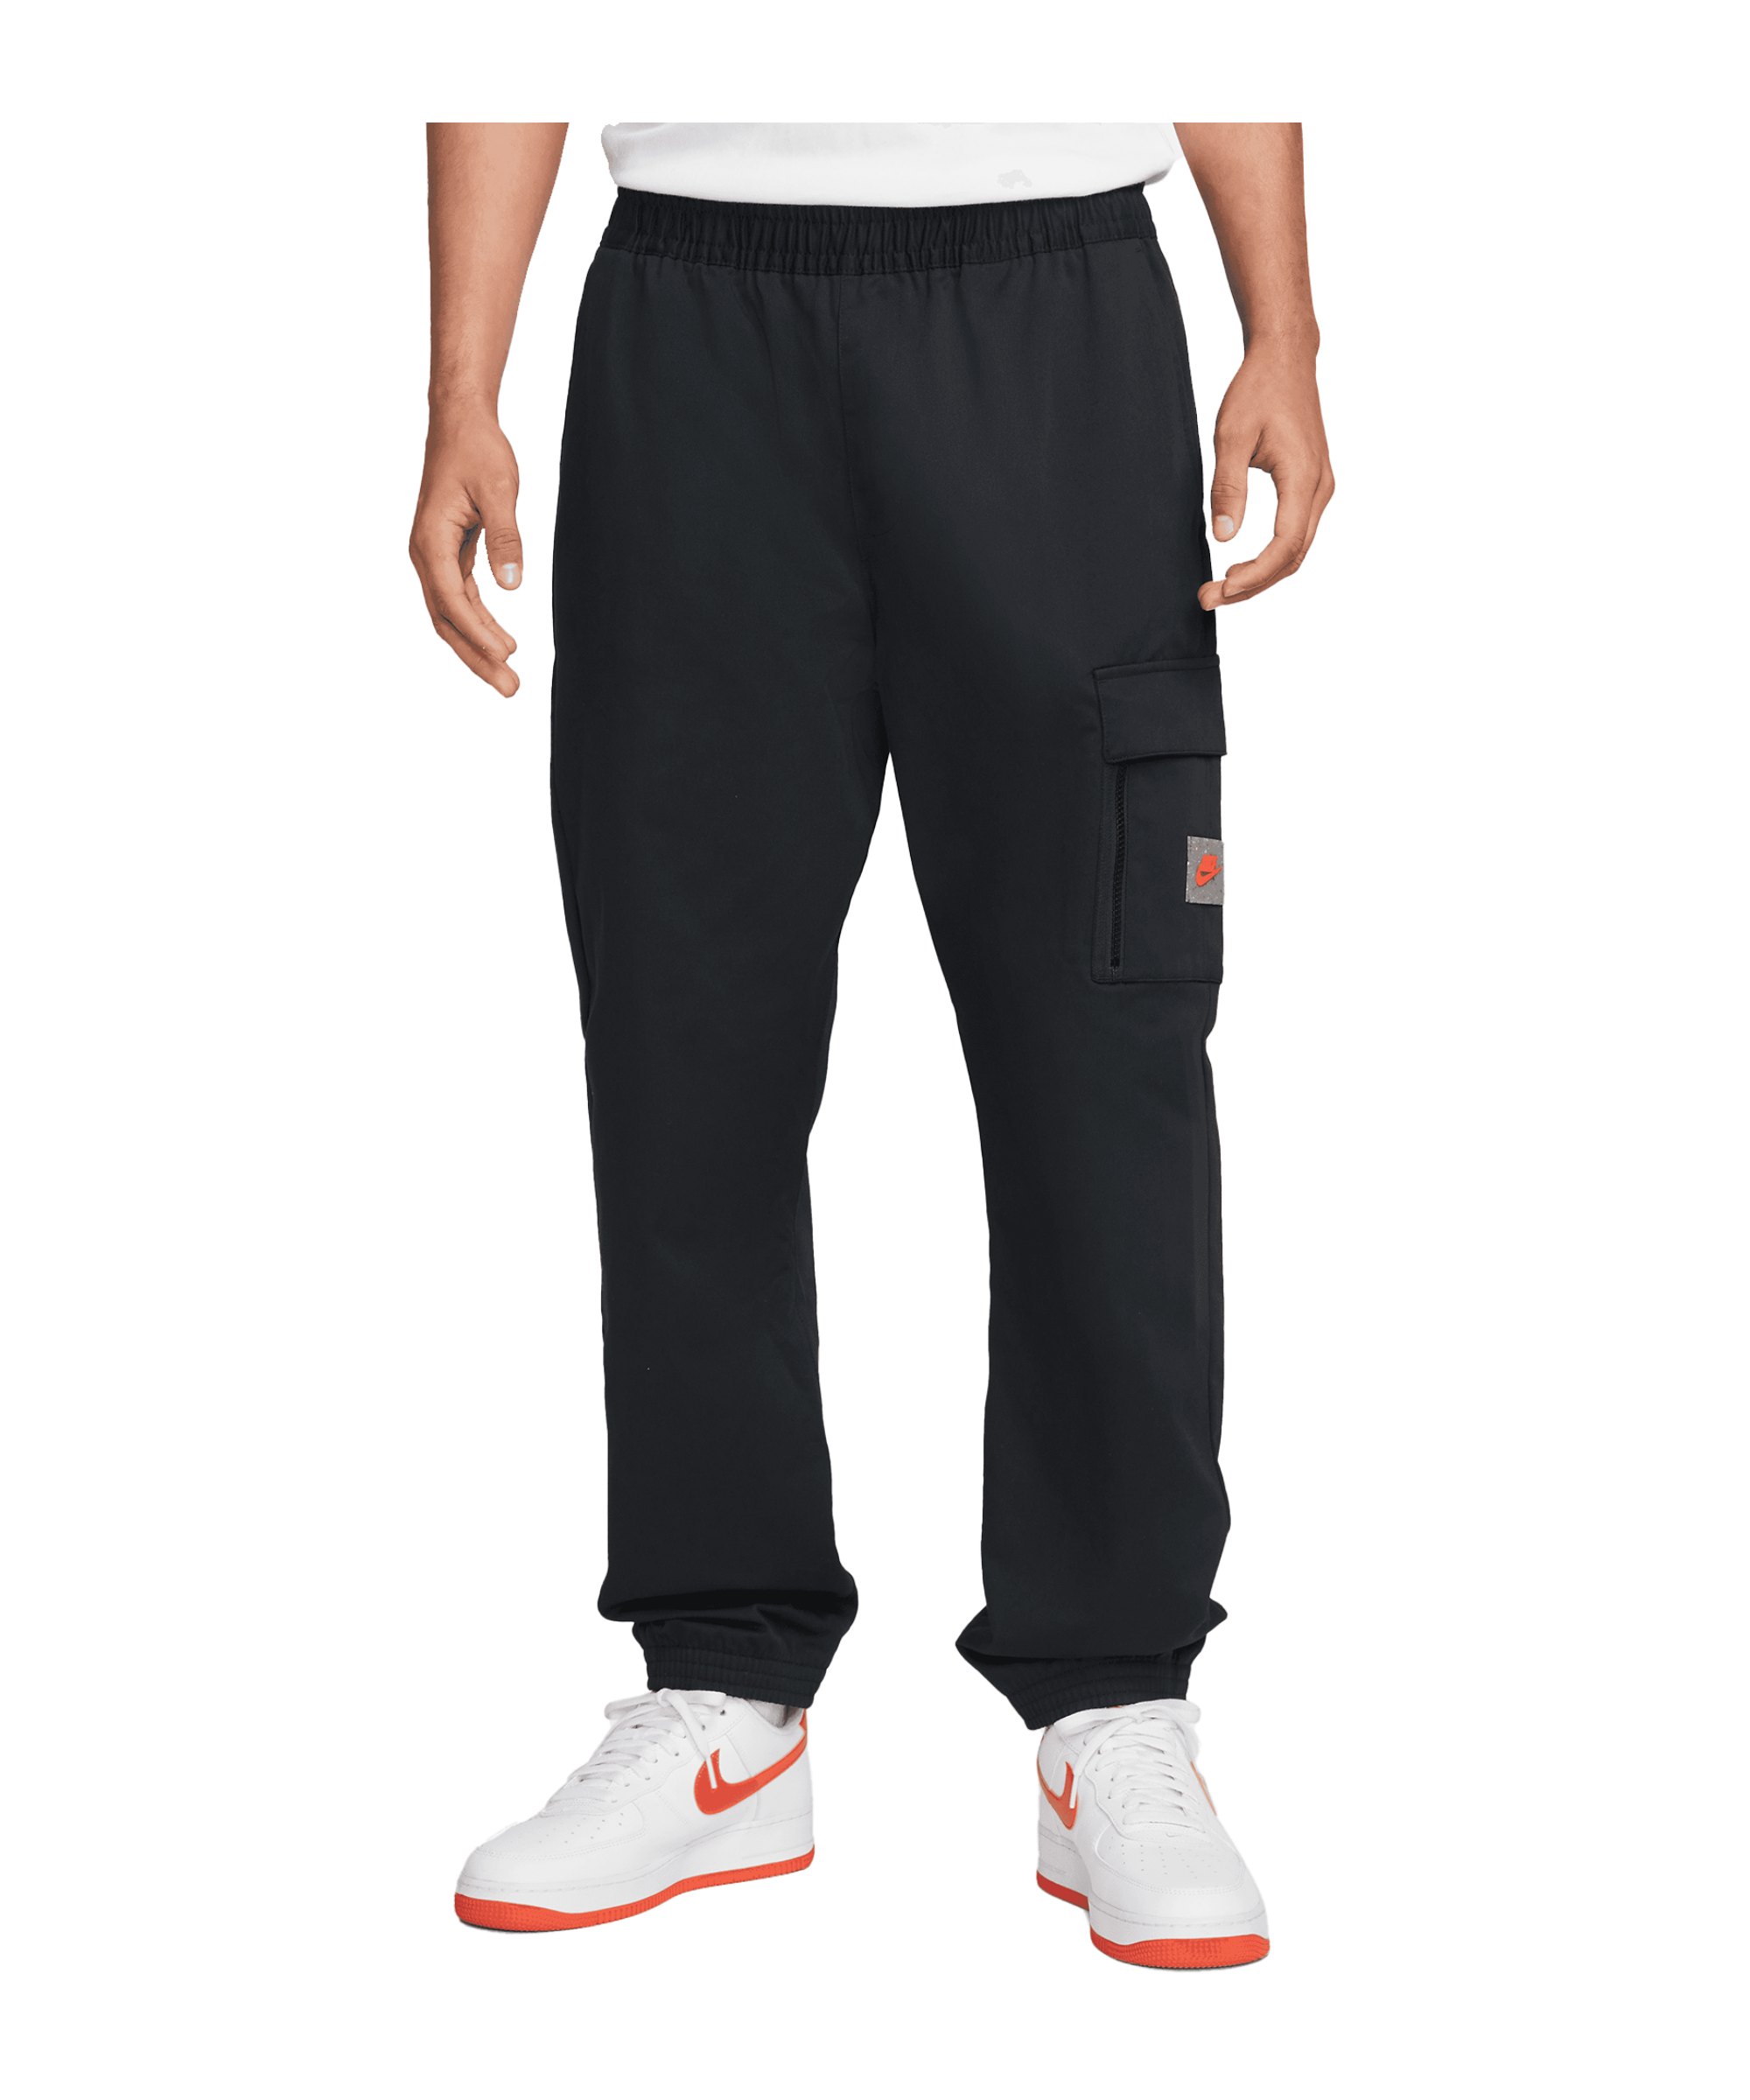 Nike Woven Jogginghose Schwarz F010 - schwarz